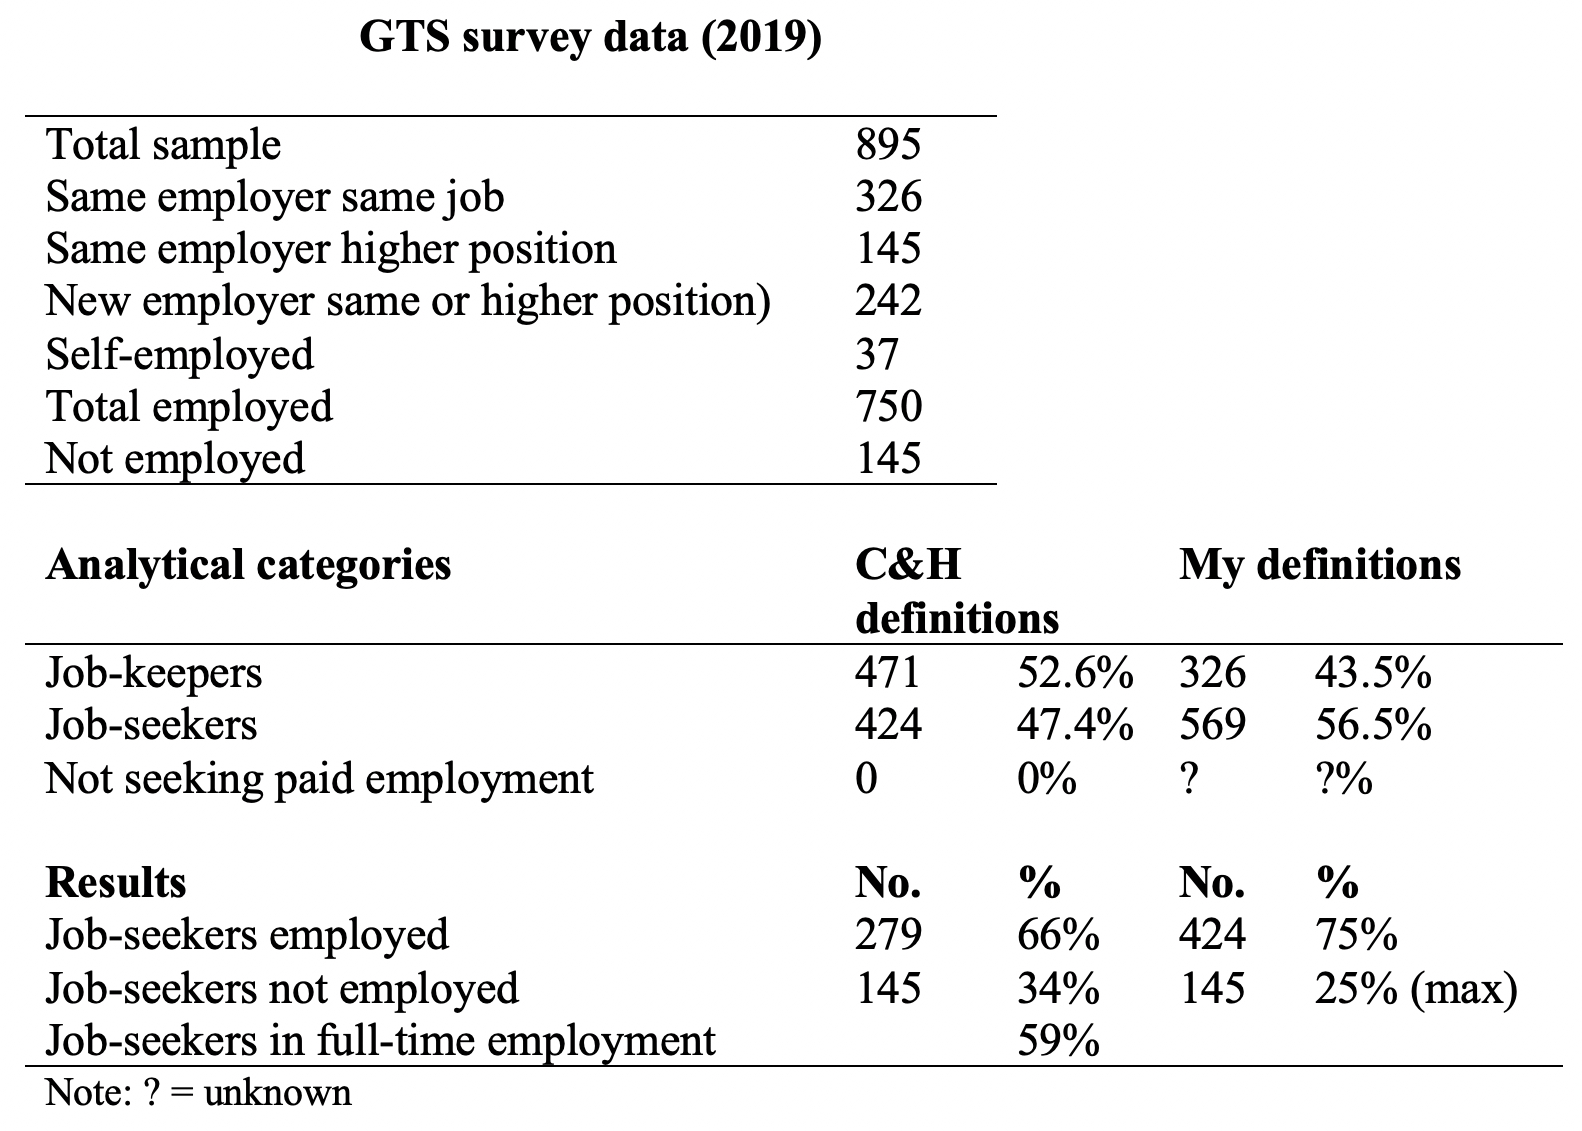 Table 1: GTS survey data (2019)